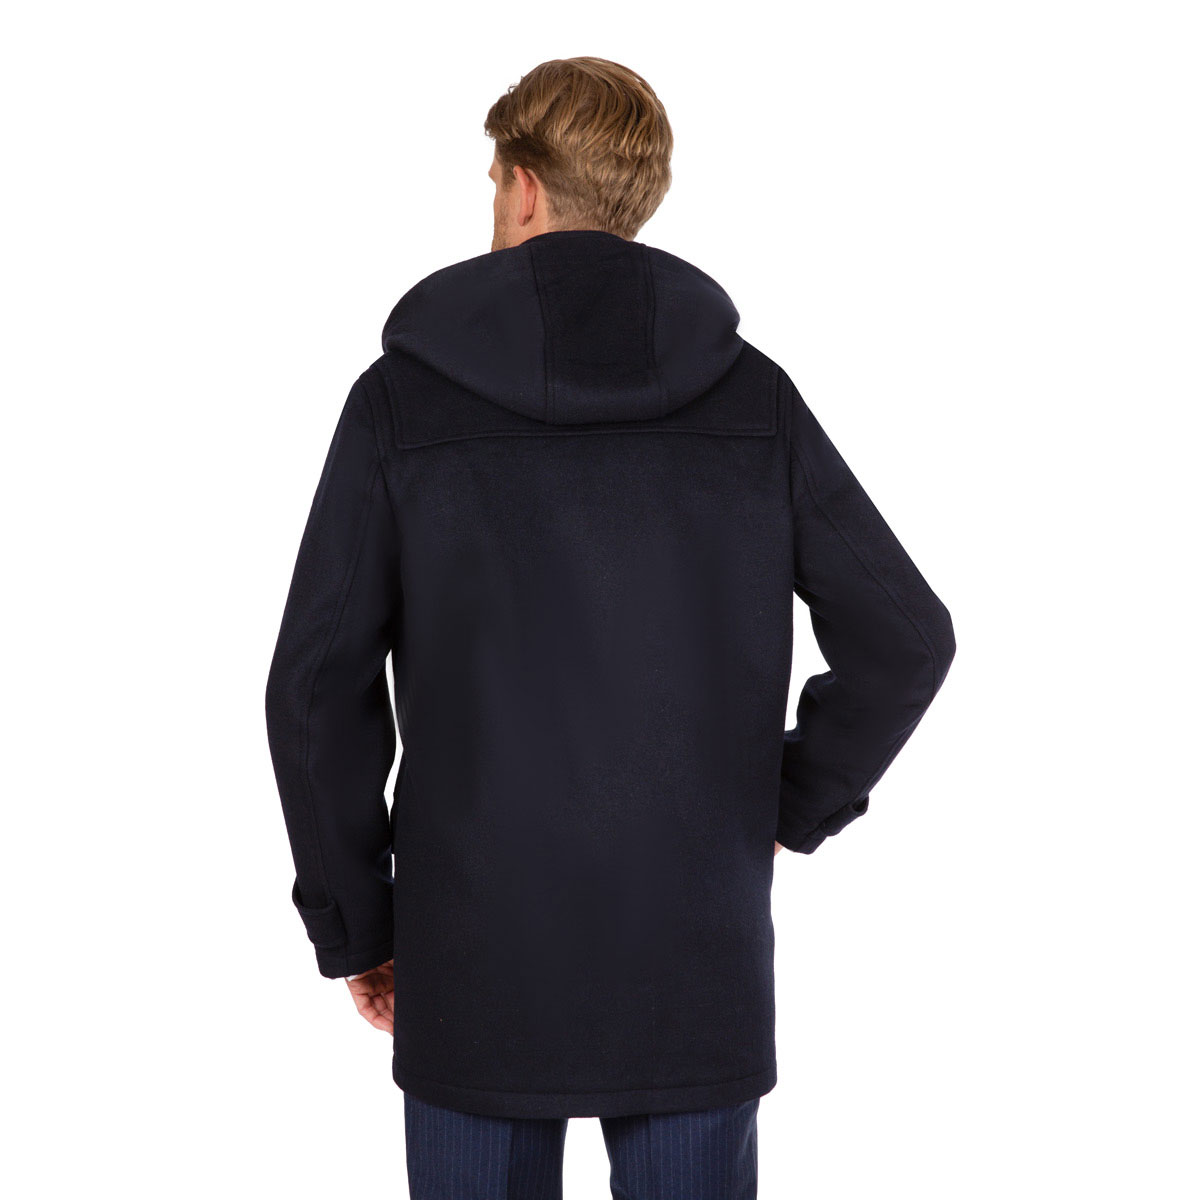 Mantel mit fest angebrachter Kapuze in dunkelblau